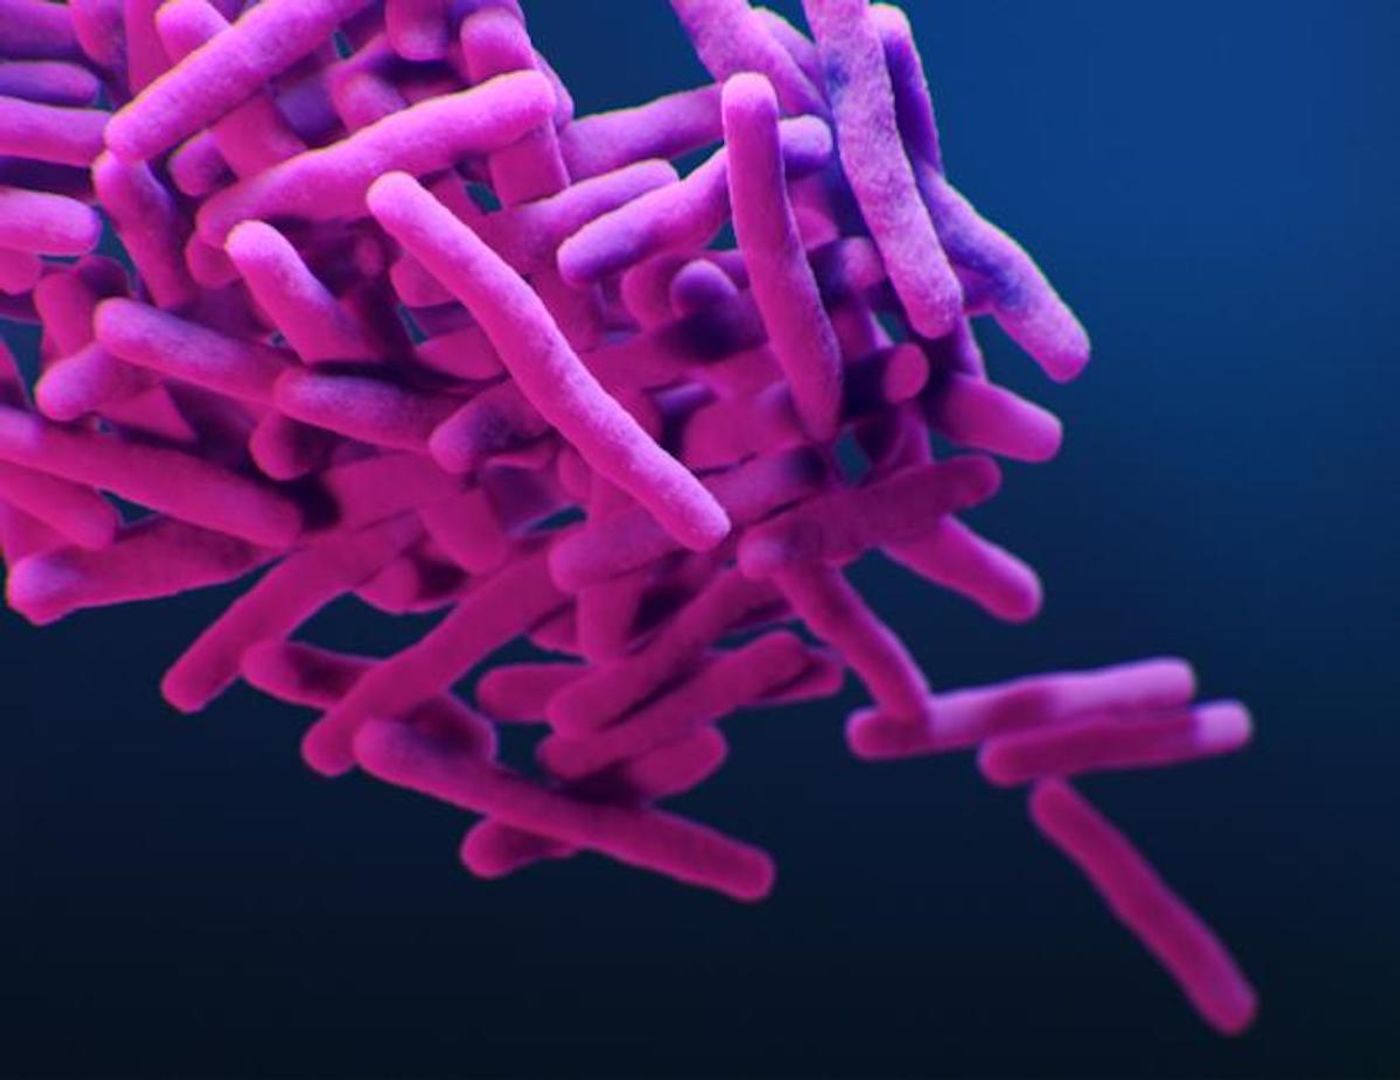 A medical illustration of drug-resistant Mycobacterium tuberculosis bacteria / Credit: CDC/ Antibiotic Resistance Coordination and Strategy Unit / Medical Illustrators: Alissa Eckert; James Archer